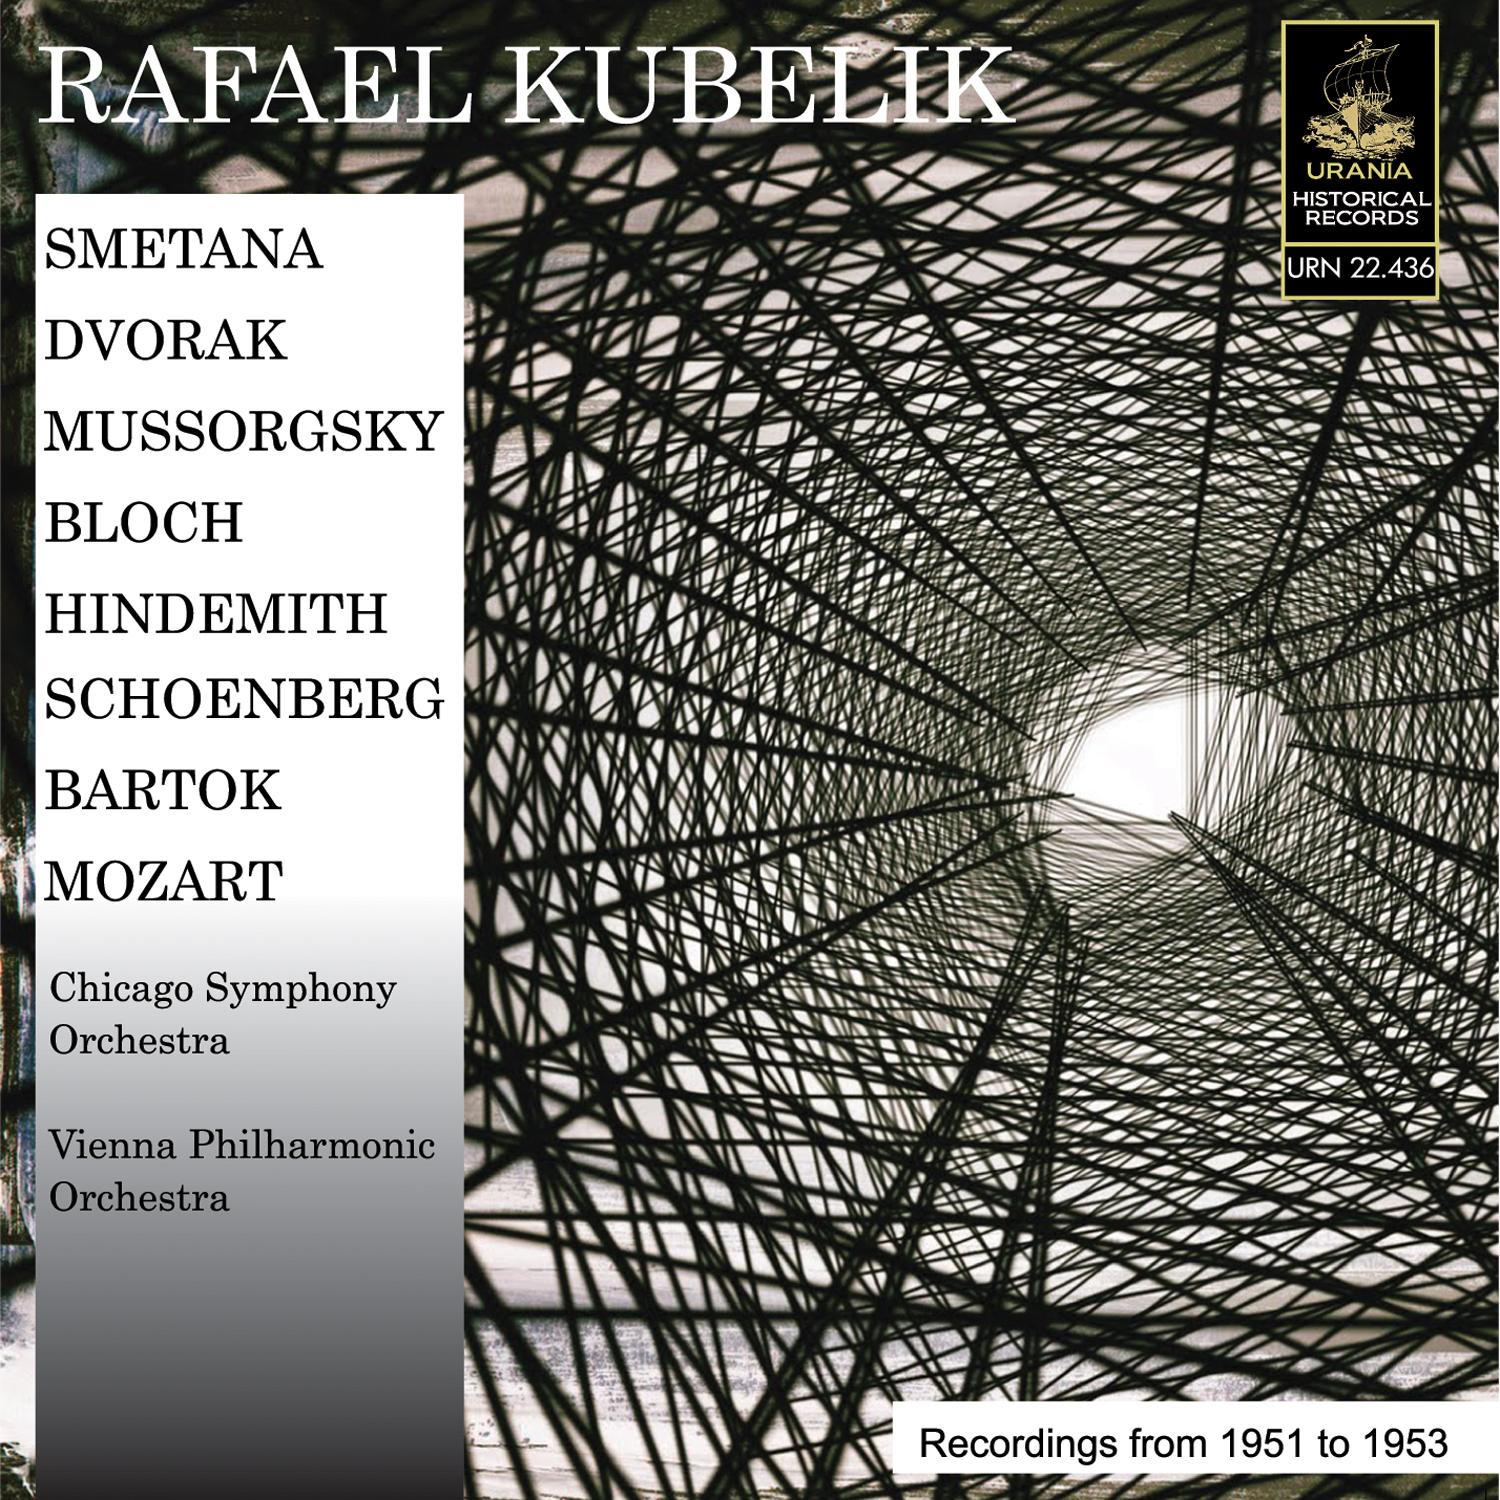 Kubelik Conducts Smetana, Mussorgsky, Hindemith, Dvoa k, Mozart and Others